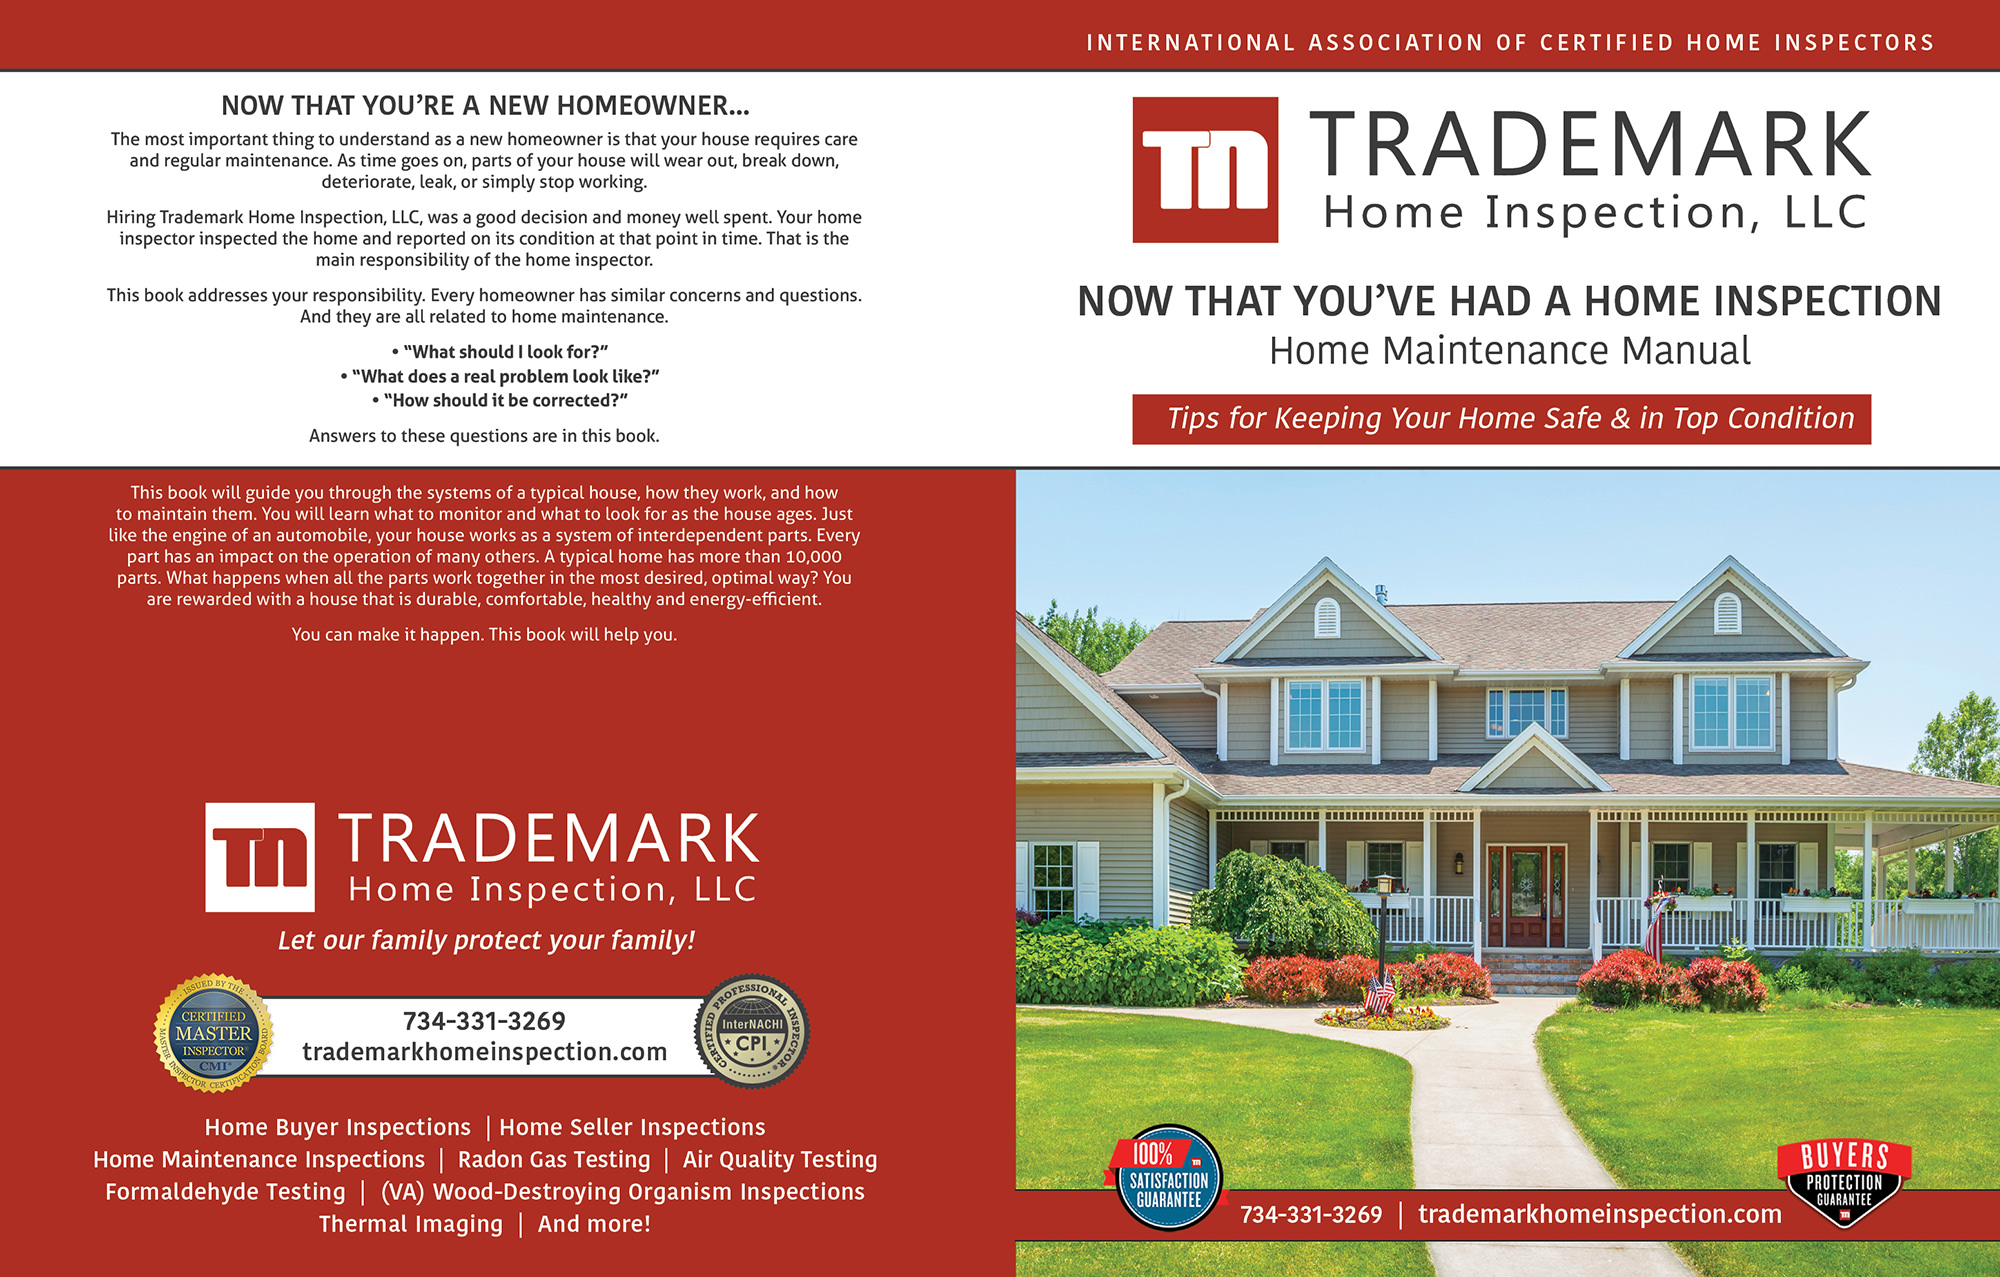 Grow Your Business with Custom Home Maintenance Books - InterNACHI®